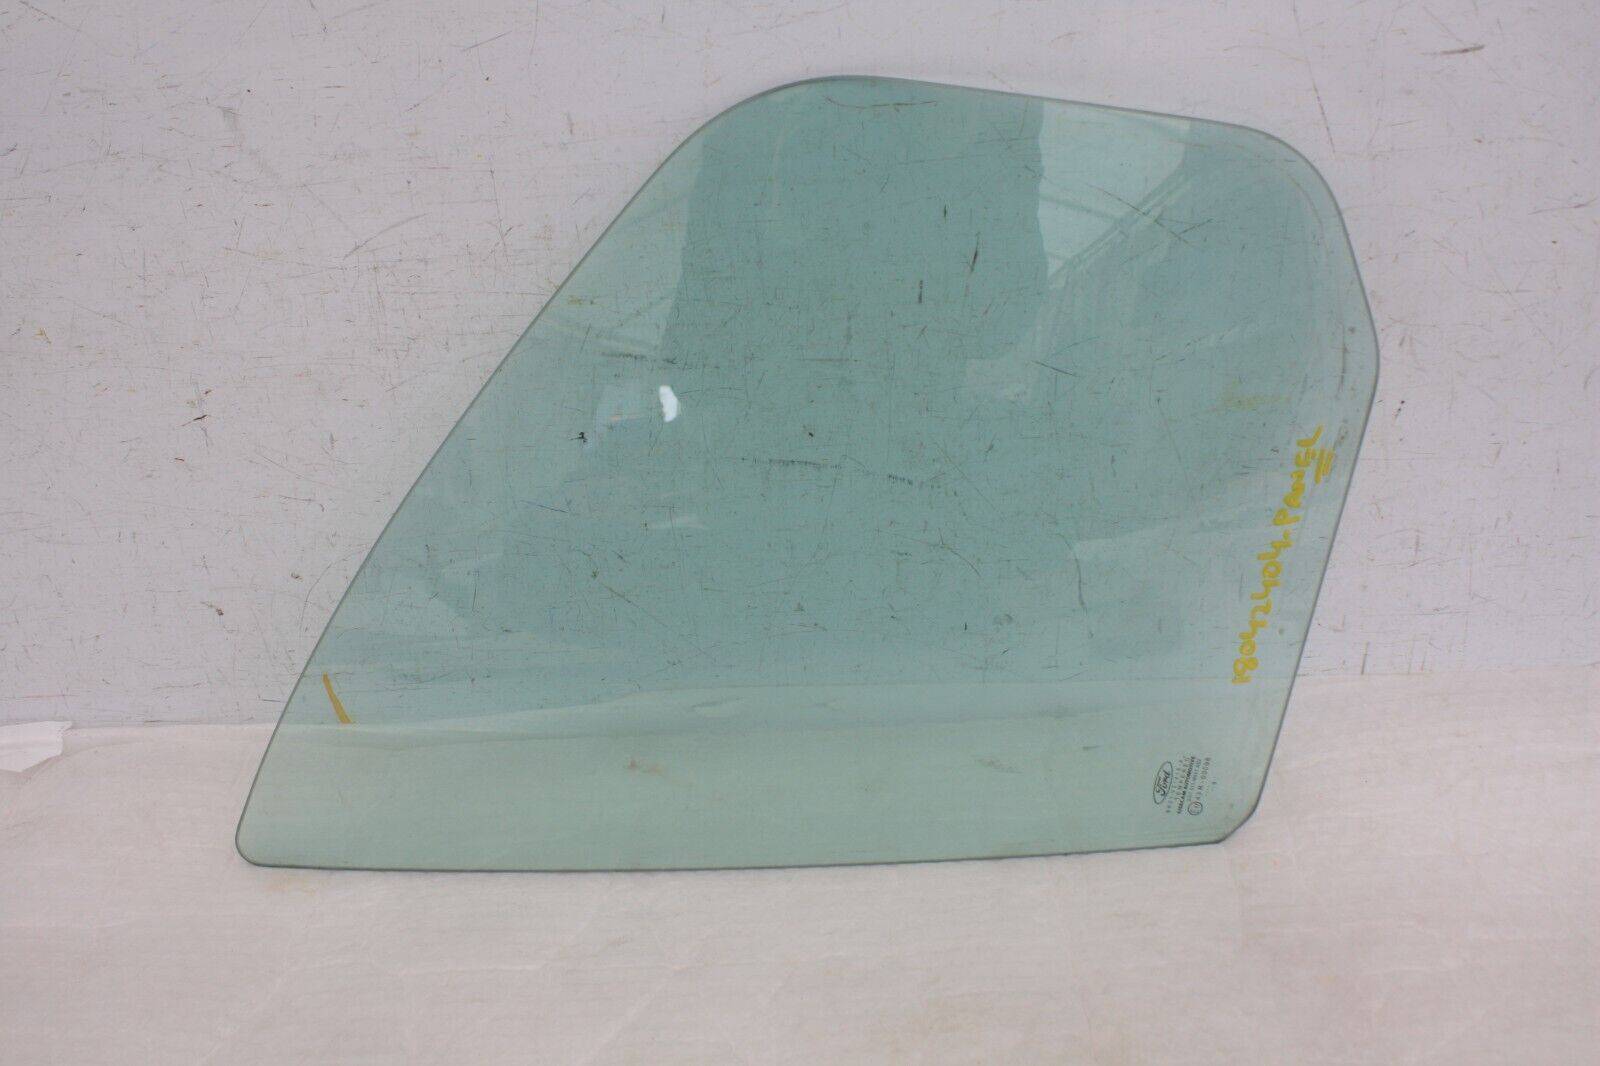 Ford Transit Custom Front Right Side Door Glass BK21 V21418 A genuine 176345583881